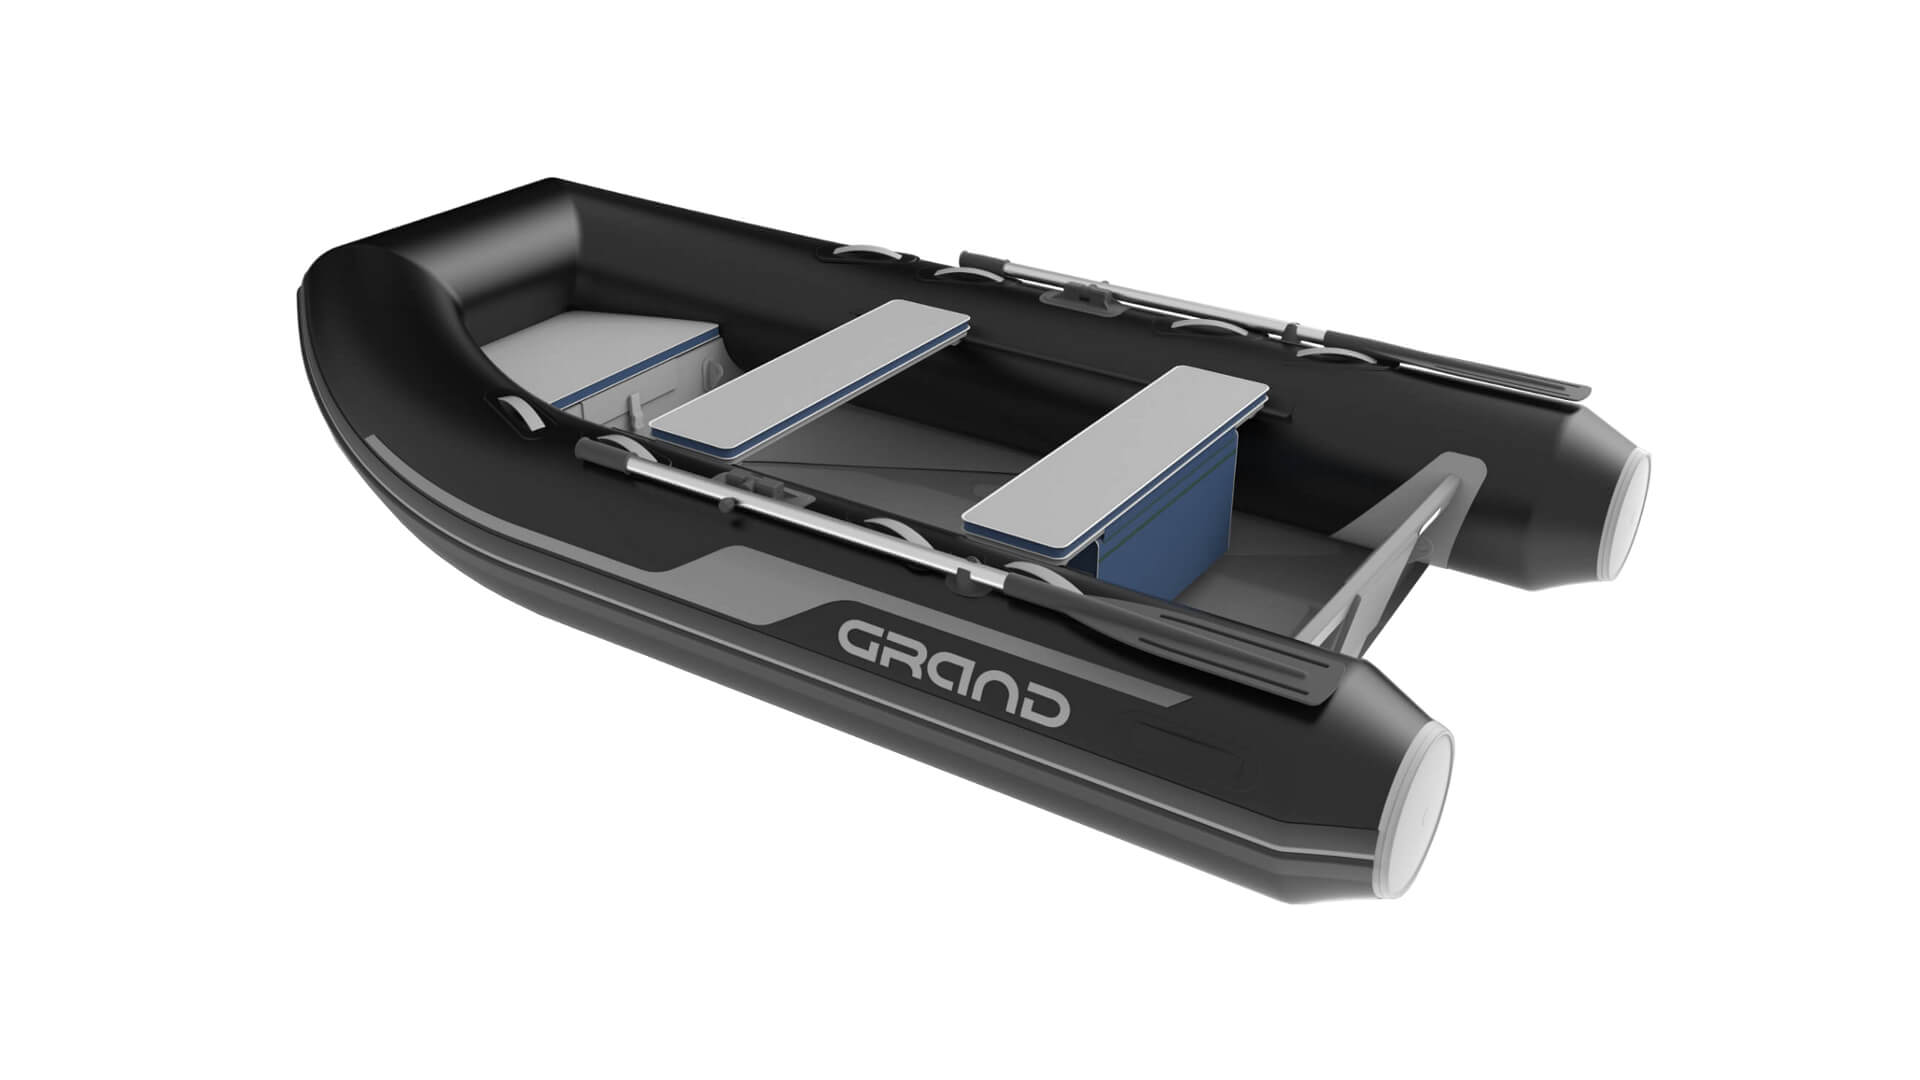 Надувная лодка с жестким алюминиевым дном GRAND Aluminum Line Alu330D, Надувная лодка GRAND Aluminum Line Alu330D, GRAND Aluminum Line Alu330D, GRAND Alu330D, GRAND Alu330D, Надувная лодка GRAND, Надувная лодка ГРАНД, Надувная лодка с жестким дном, RIB, Rigid Inflatable Boats